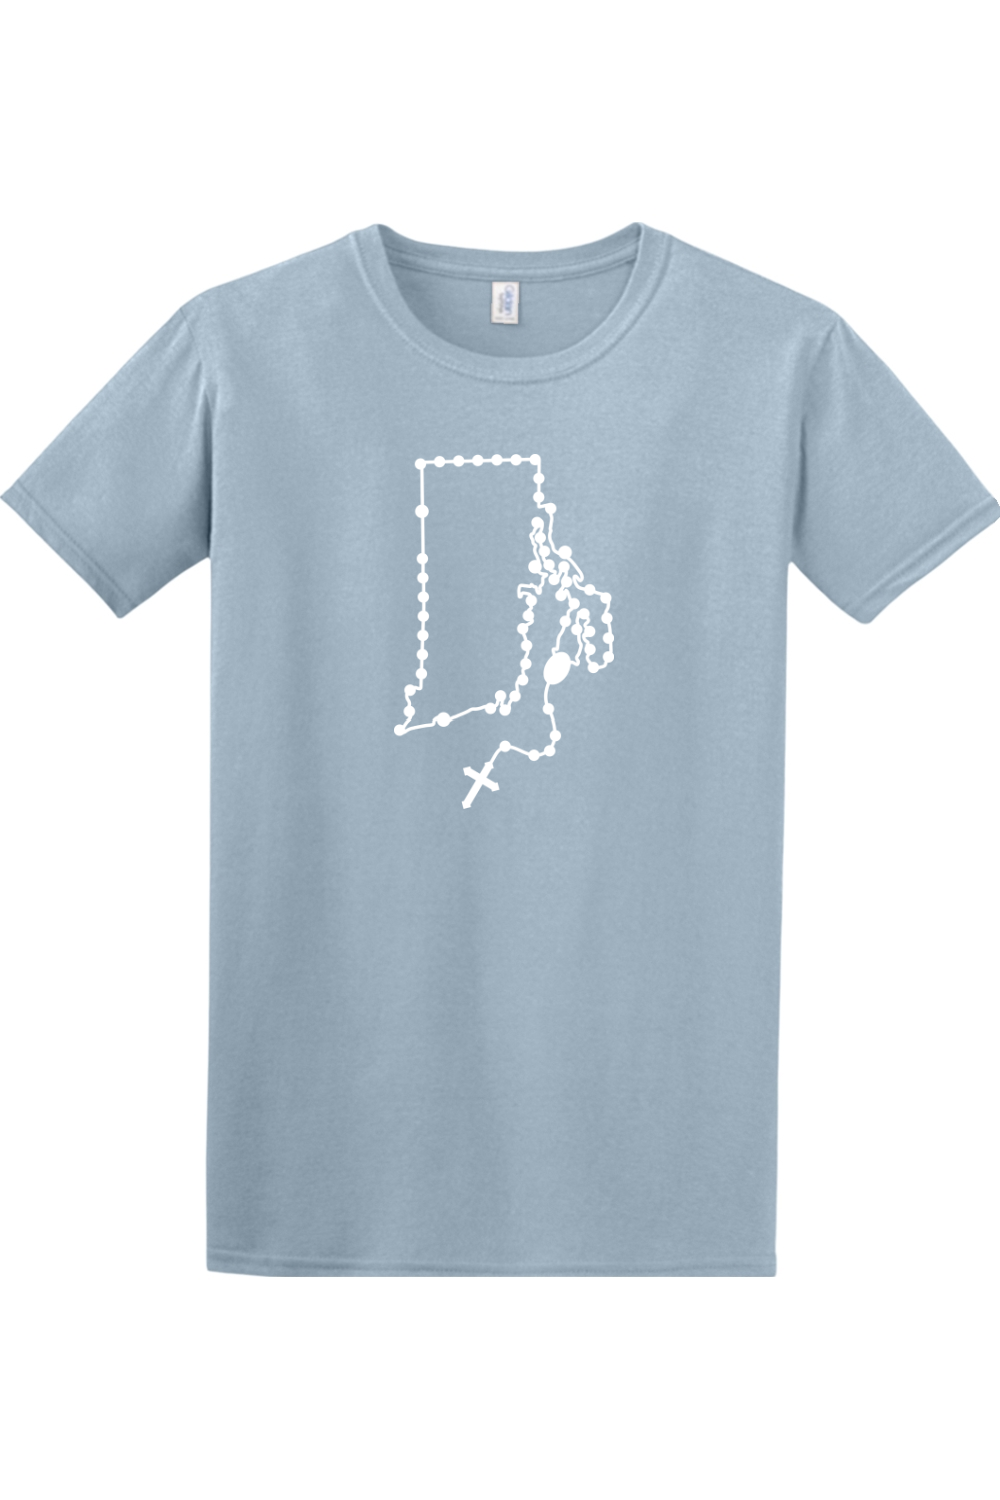 Rhode Island Catholic Rosary Adult T-shirt